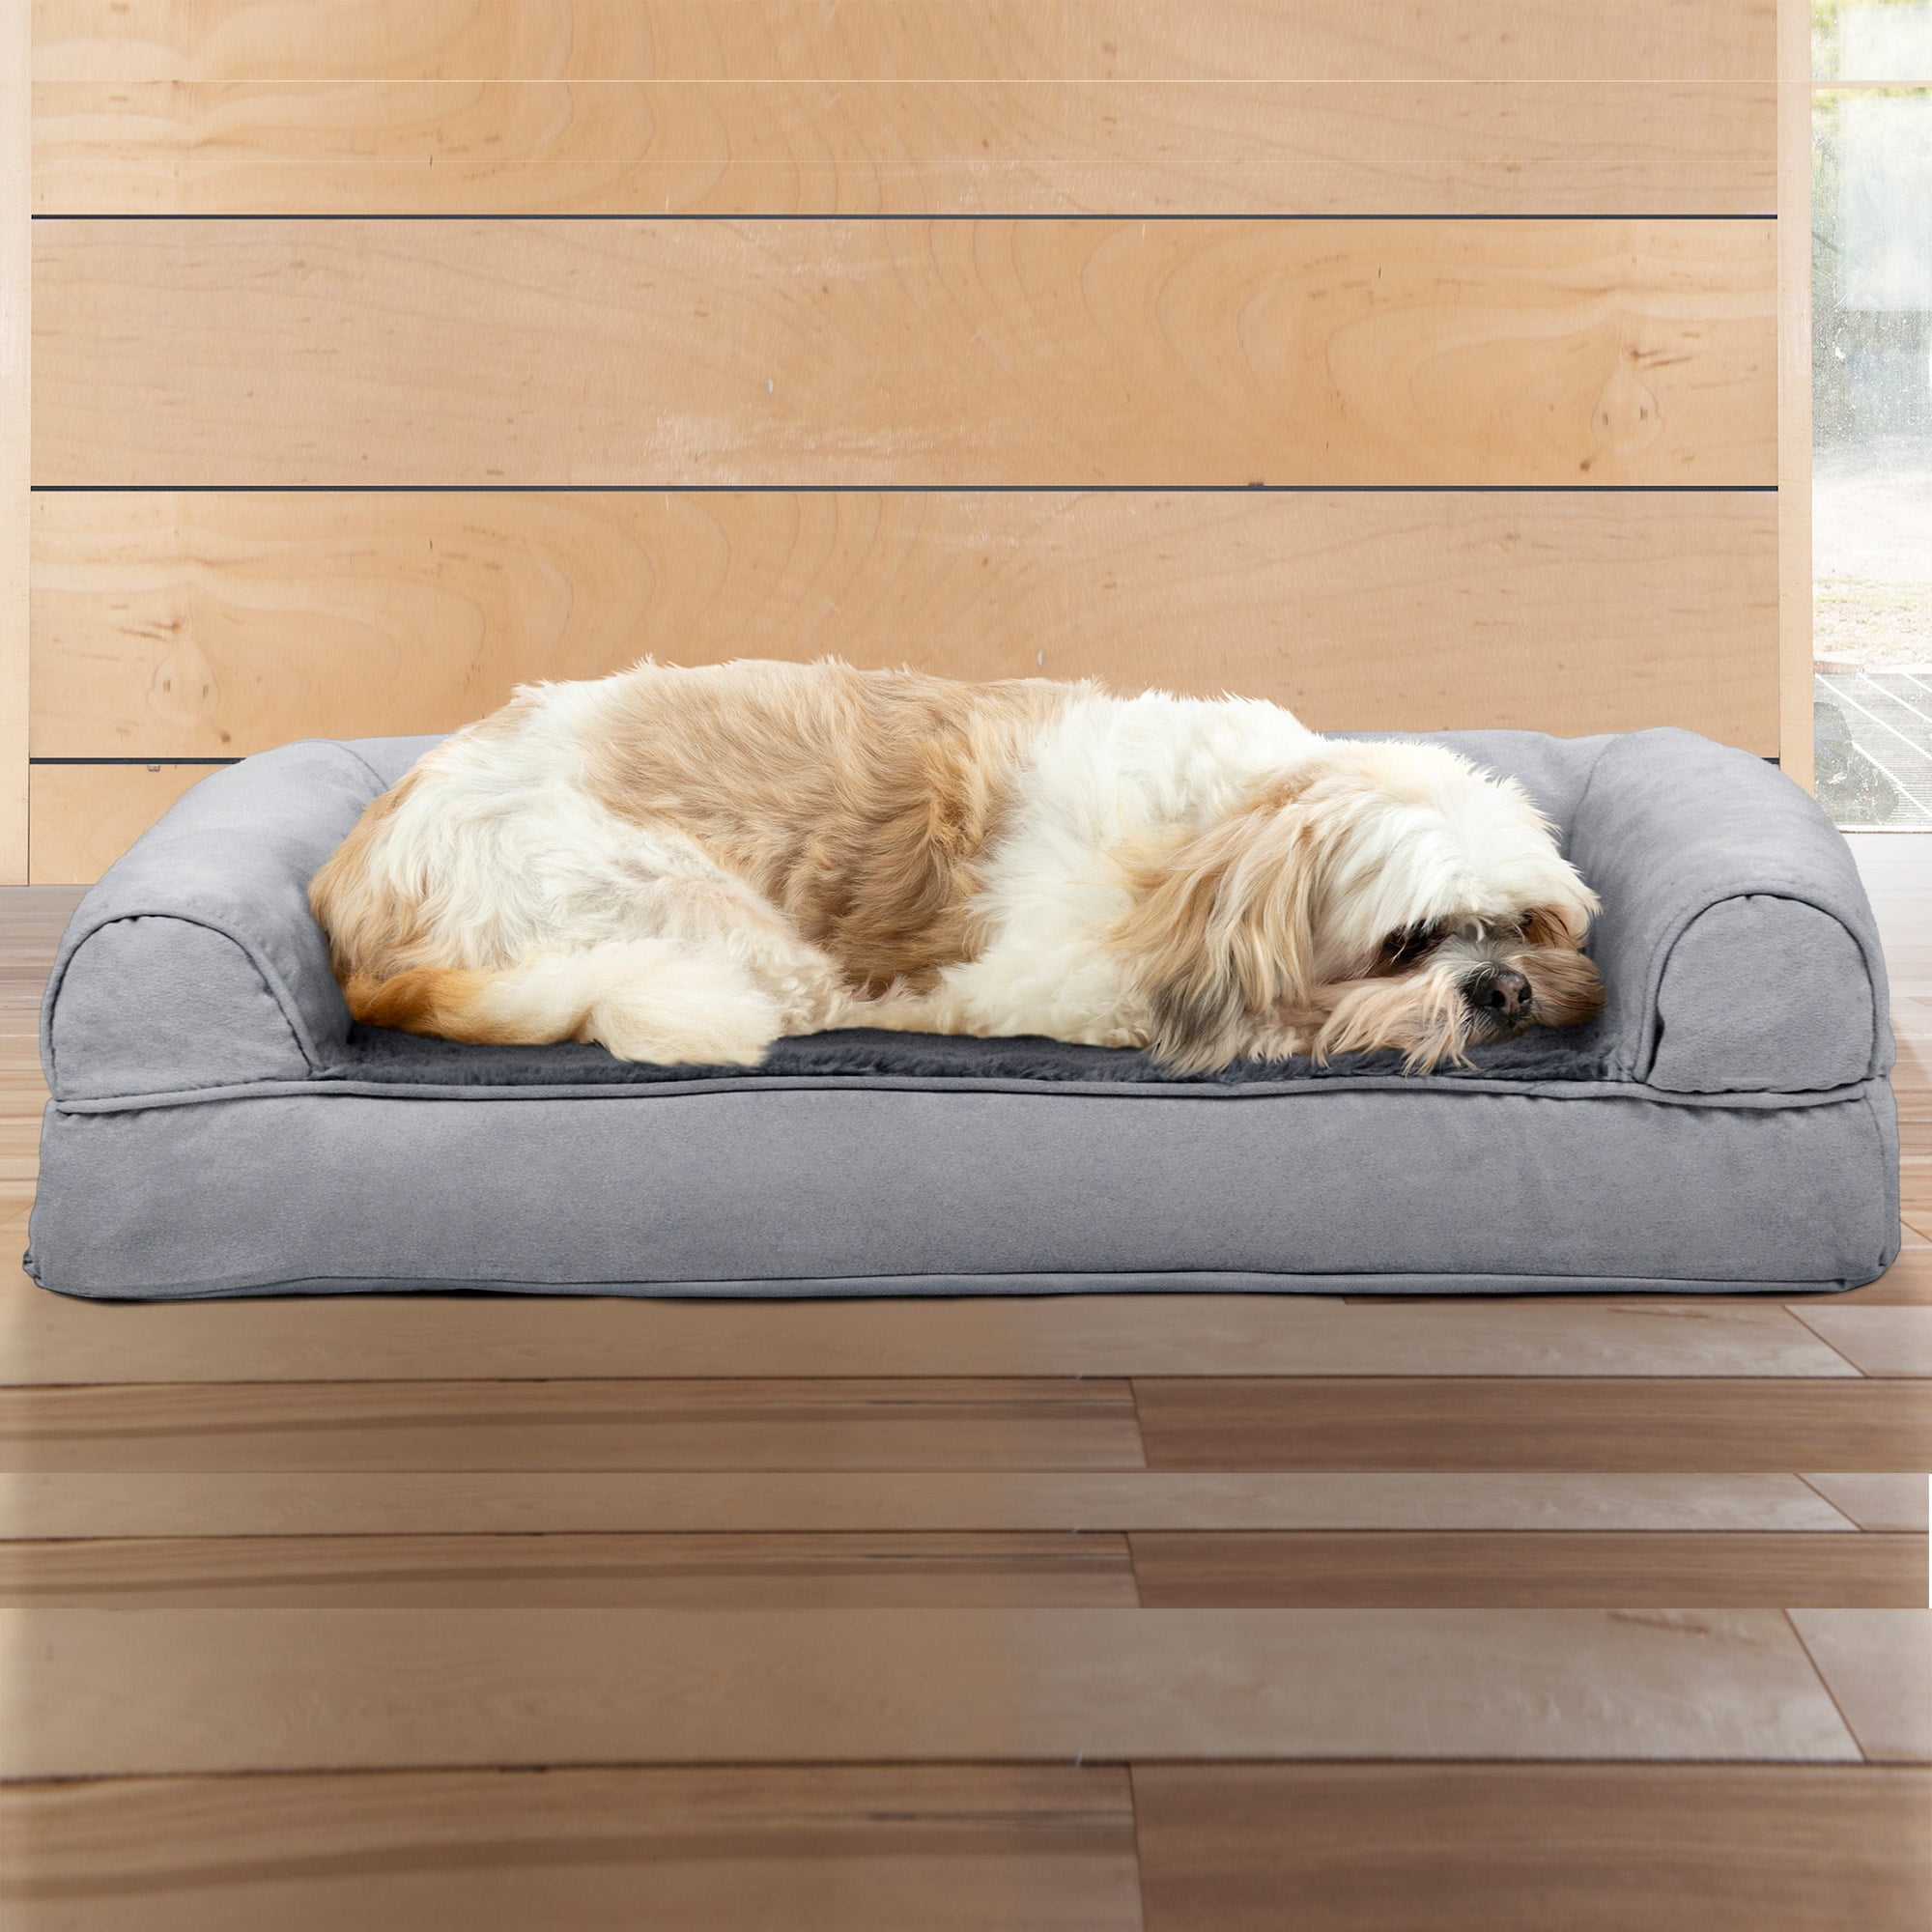 FurHaven Pet Products Plush & Suede Cooling Gel Memory Foam Sofa